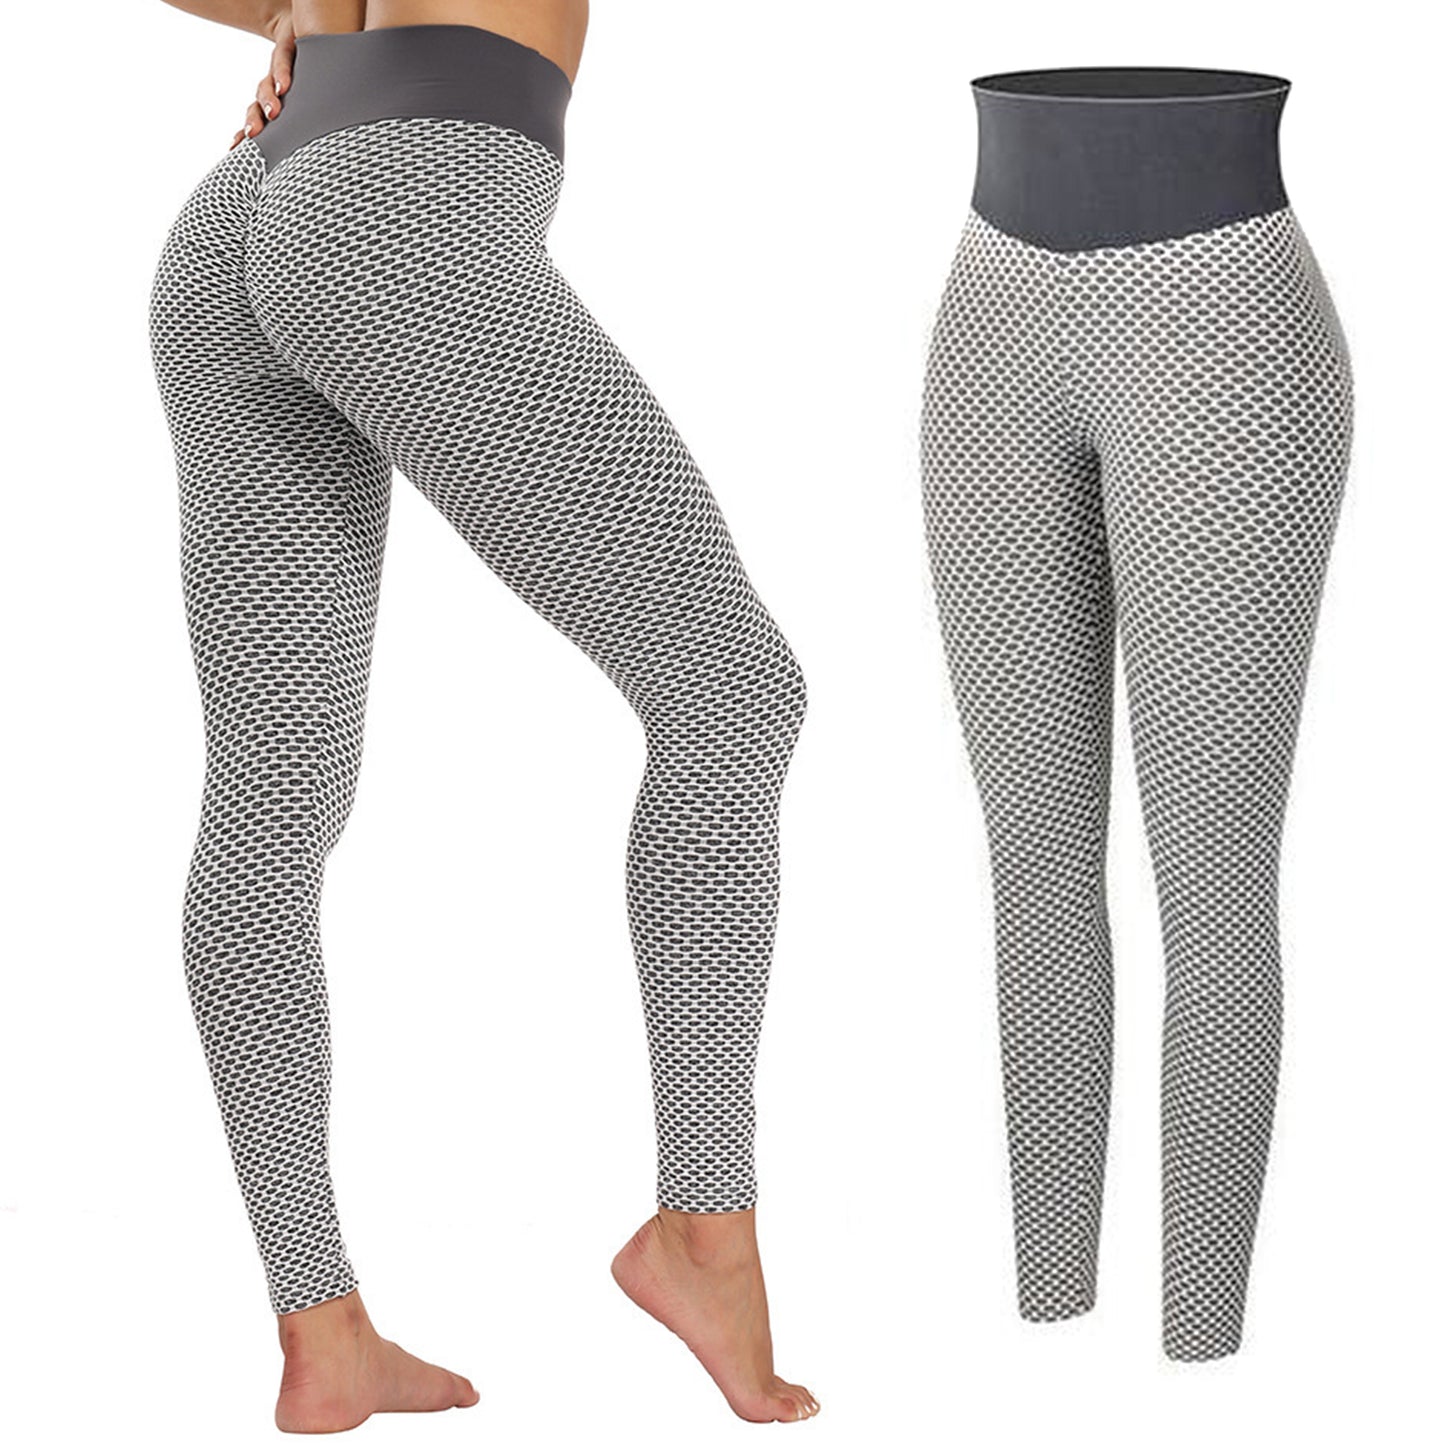 TIK Tok Leggings Women Butt Lifting Workout Tights Plus Size Sports High Waist Yoga Pants Light Grey - Better Life